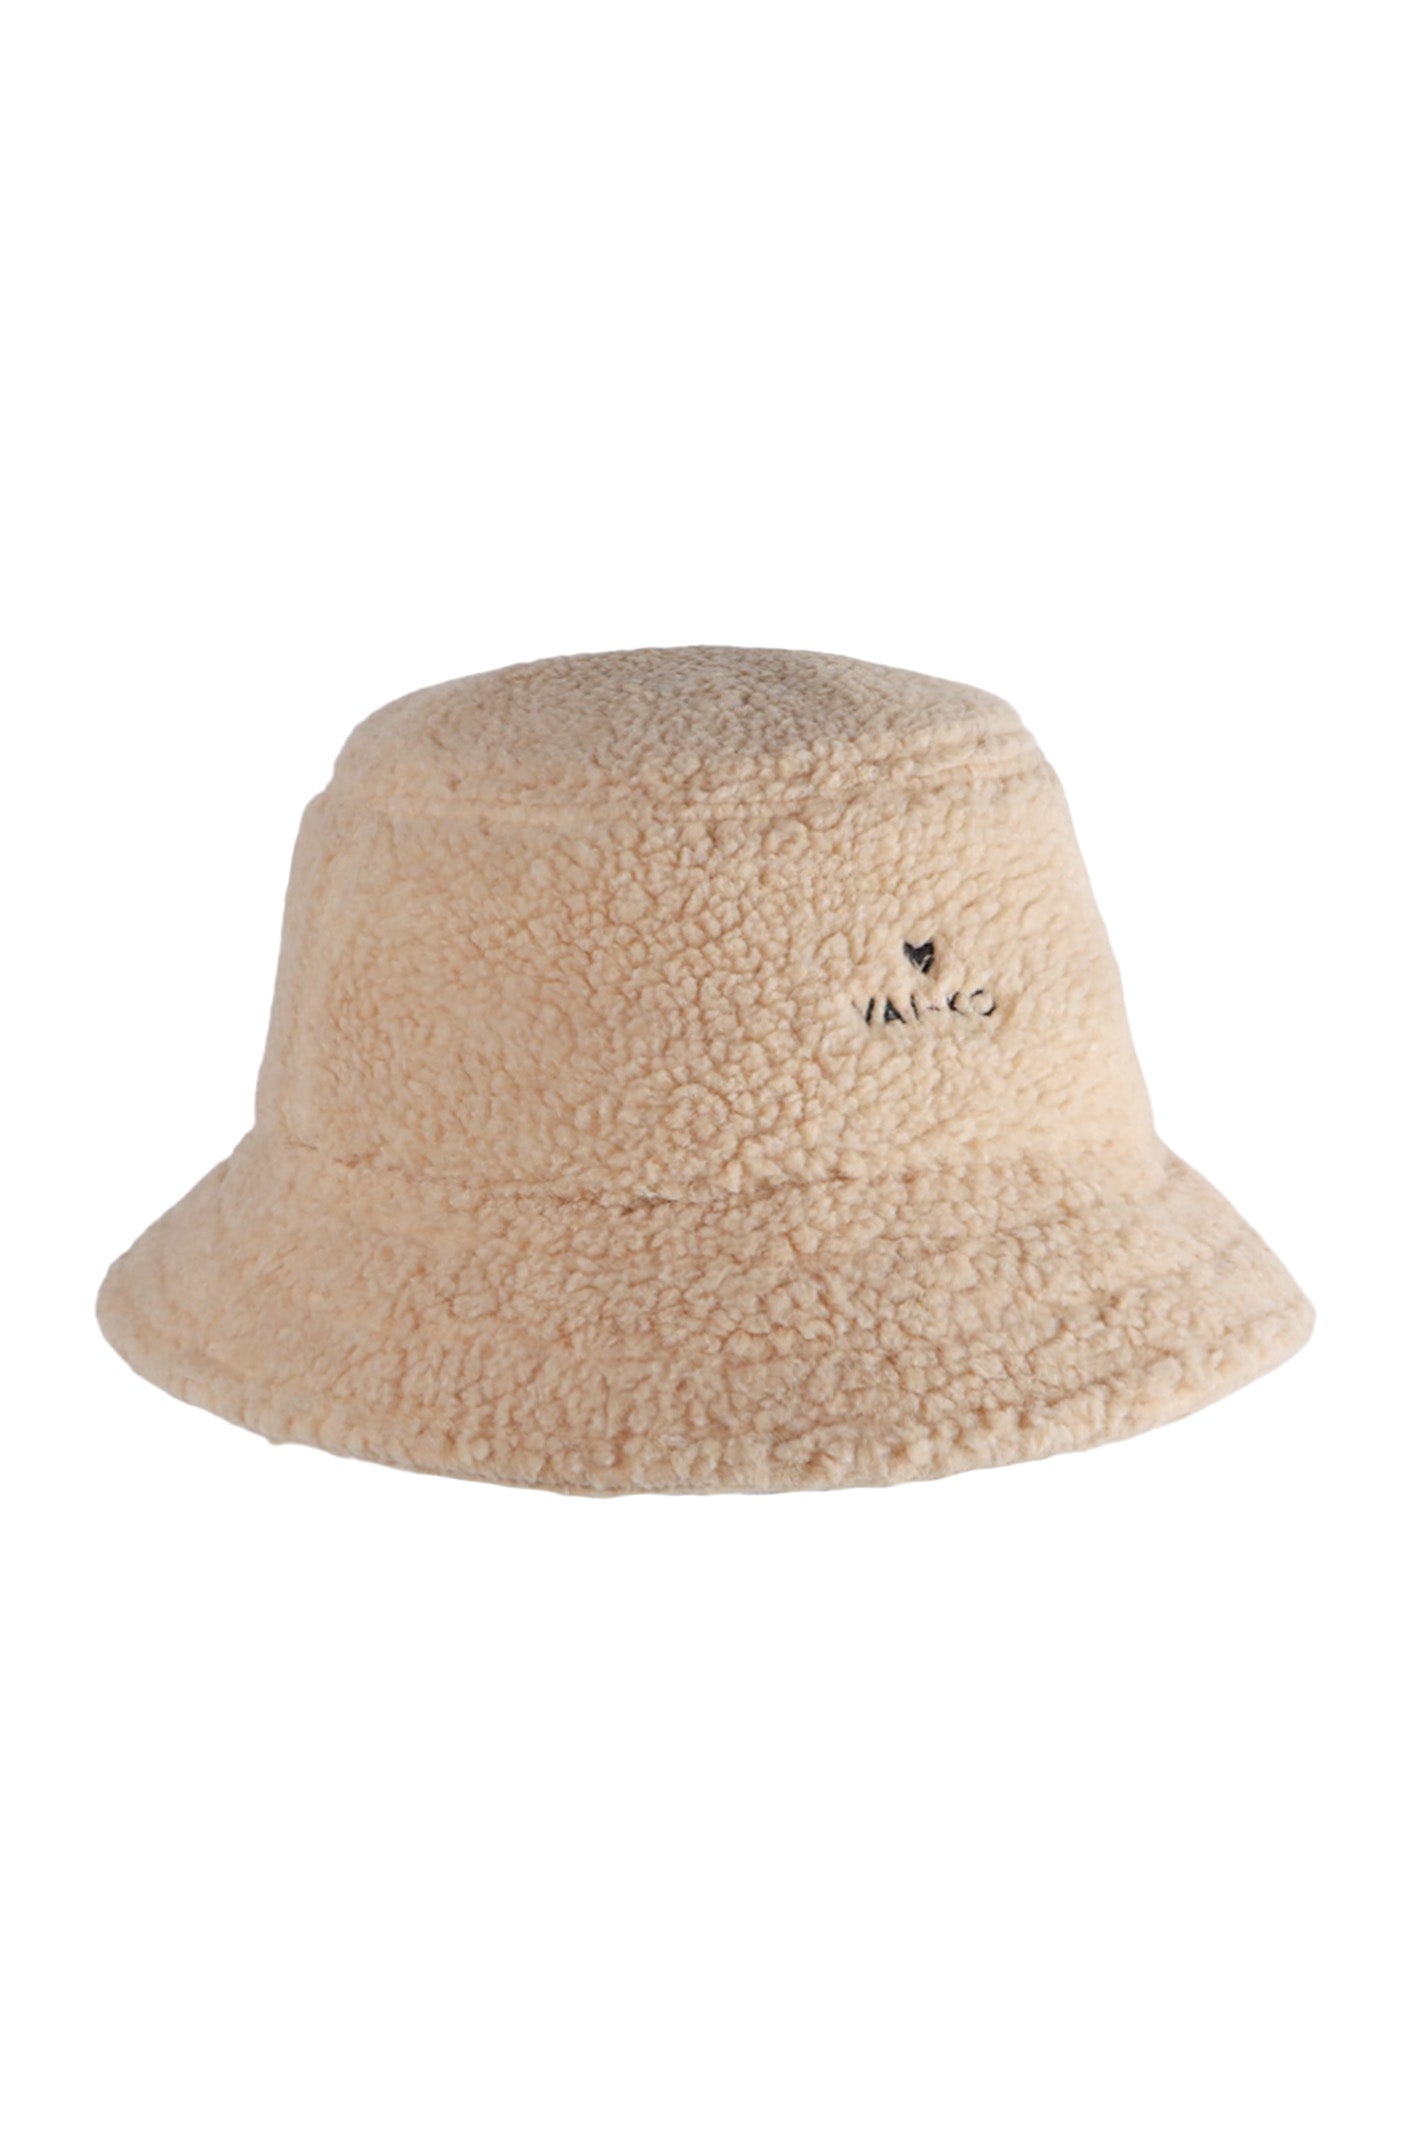 Teddy top hat